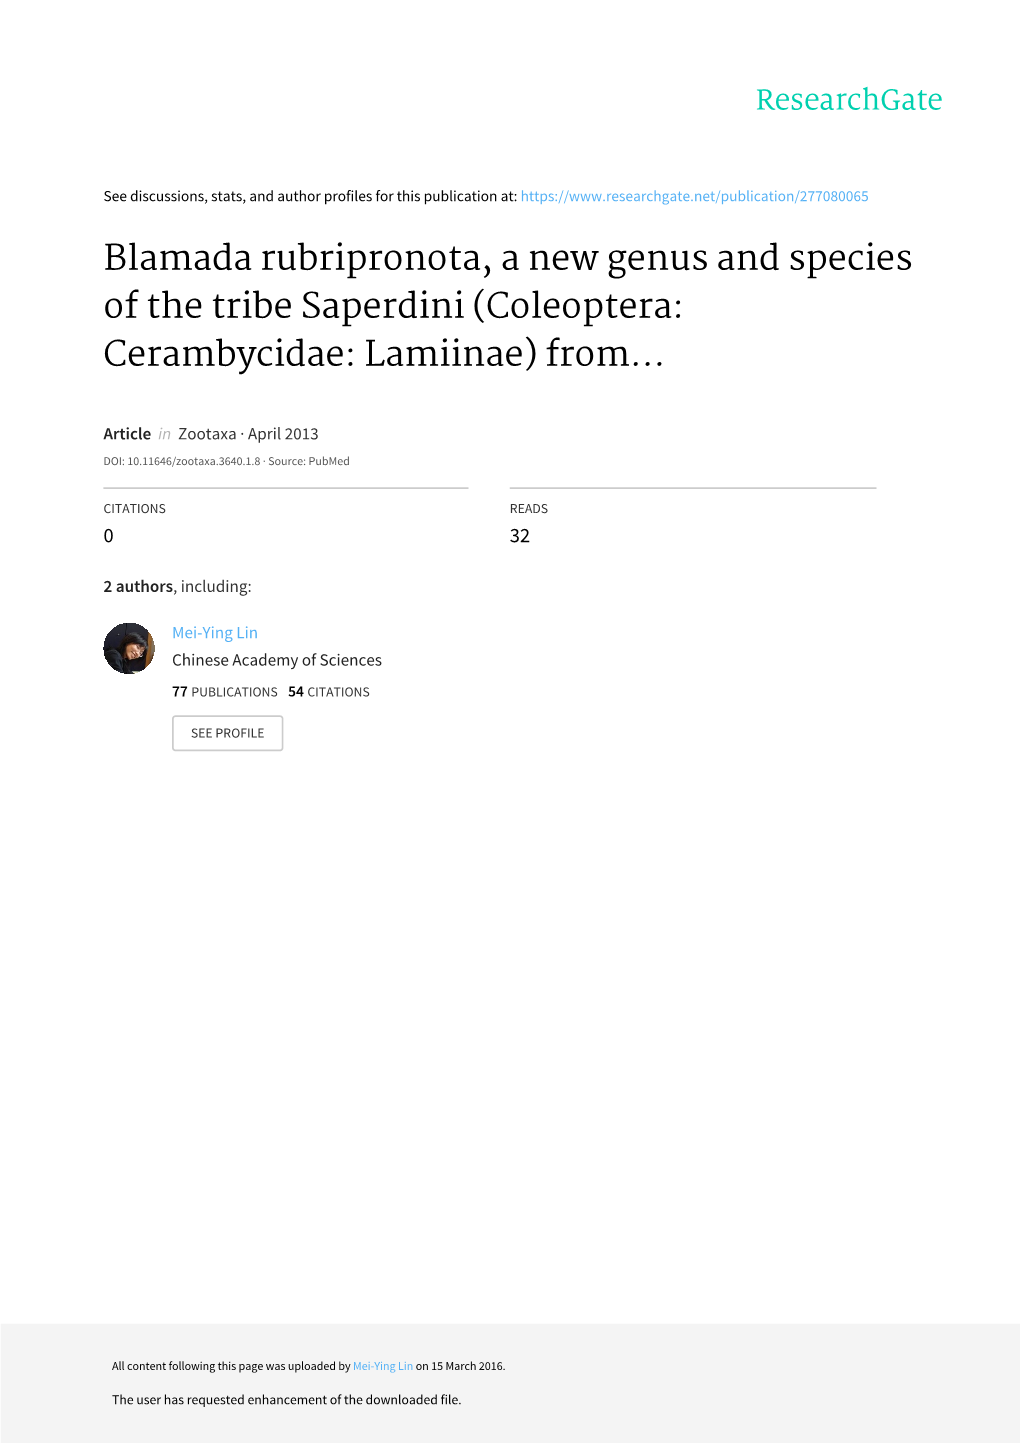 Blamada Rubripronota, a New Genus and Species of the Tribe Saperdini (Coleoptera: Cerambycidae: Lamiinae) from Southeast Asia